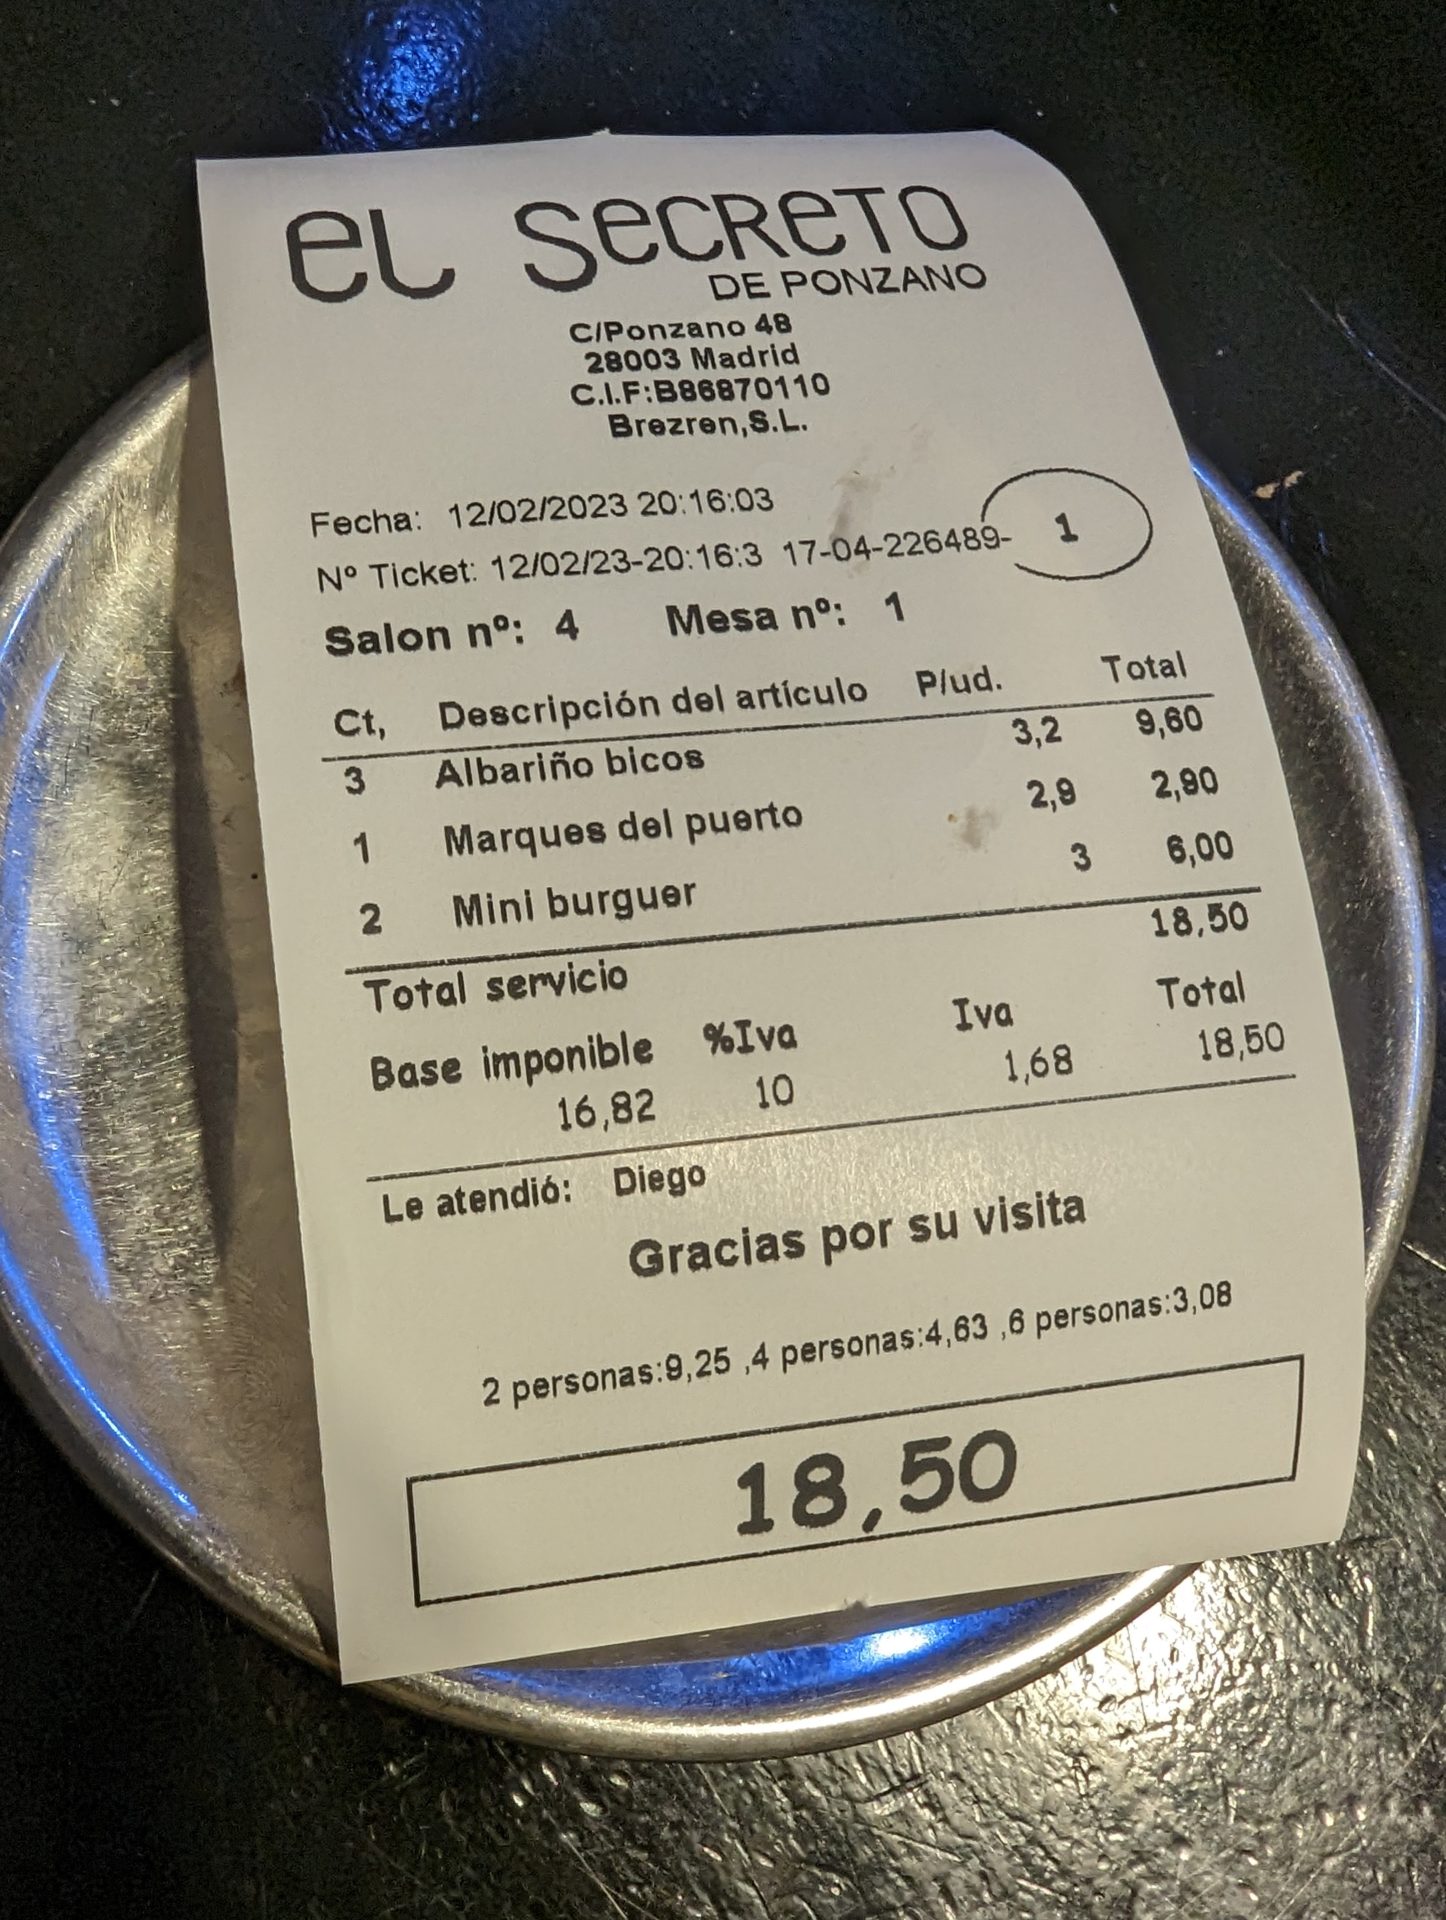 a receipt on a metal plate